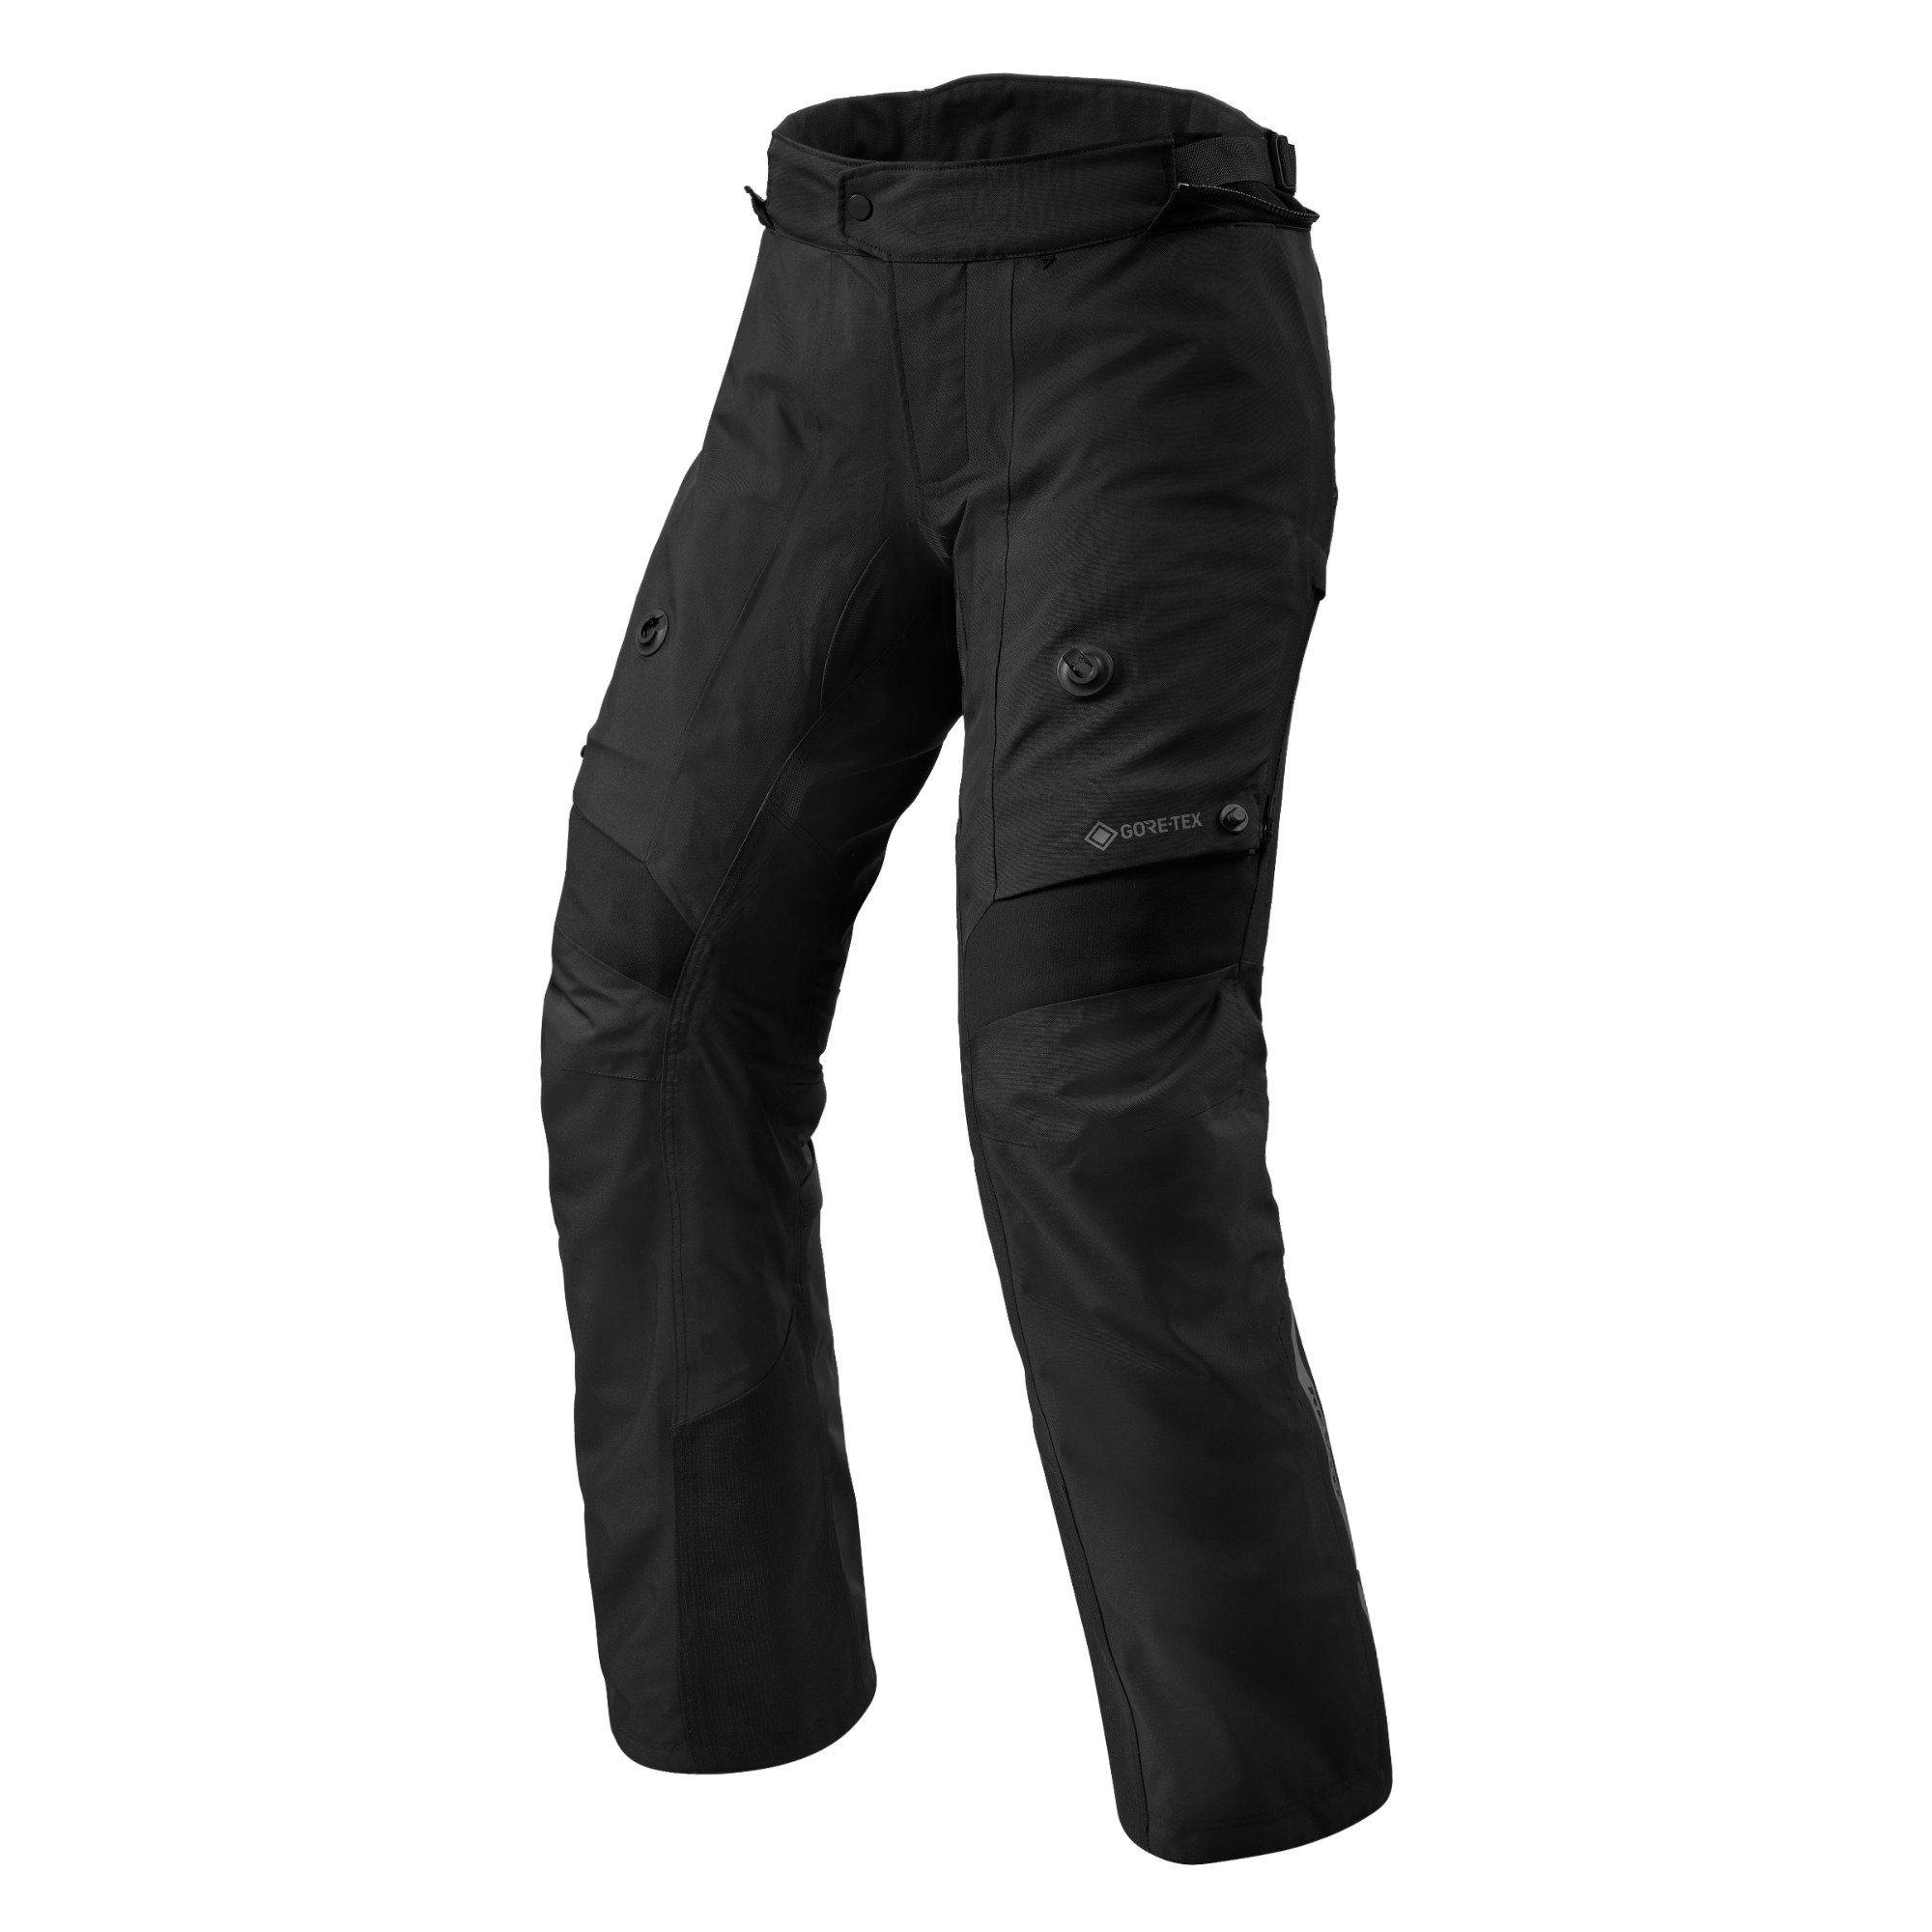 Image of REV'IT! Pants Poseidon 3 GTX Black Standard Motorcycle Pants Talla 2XL